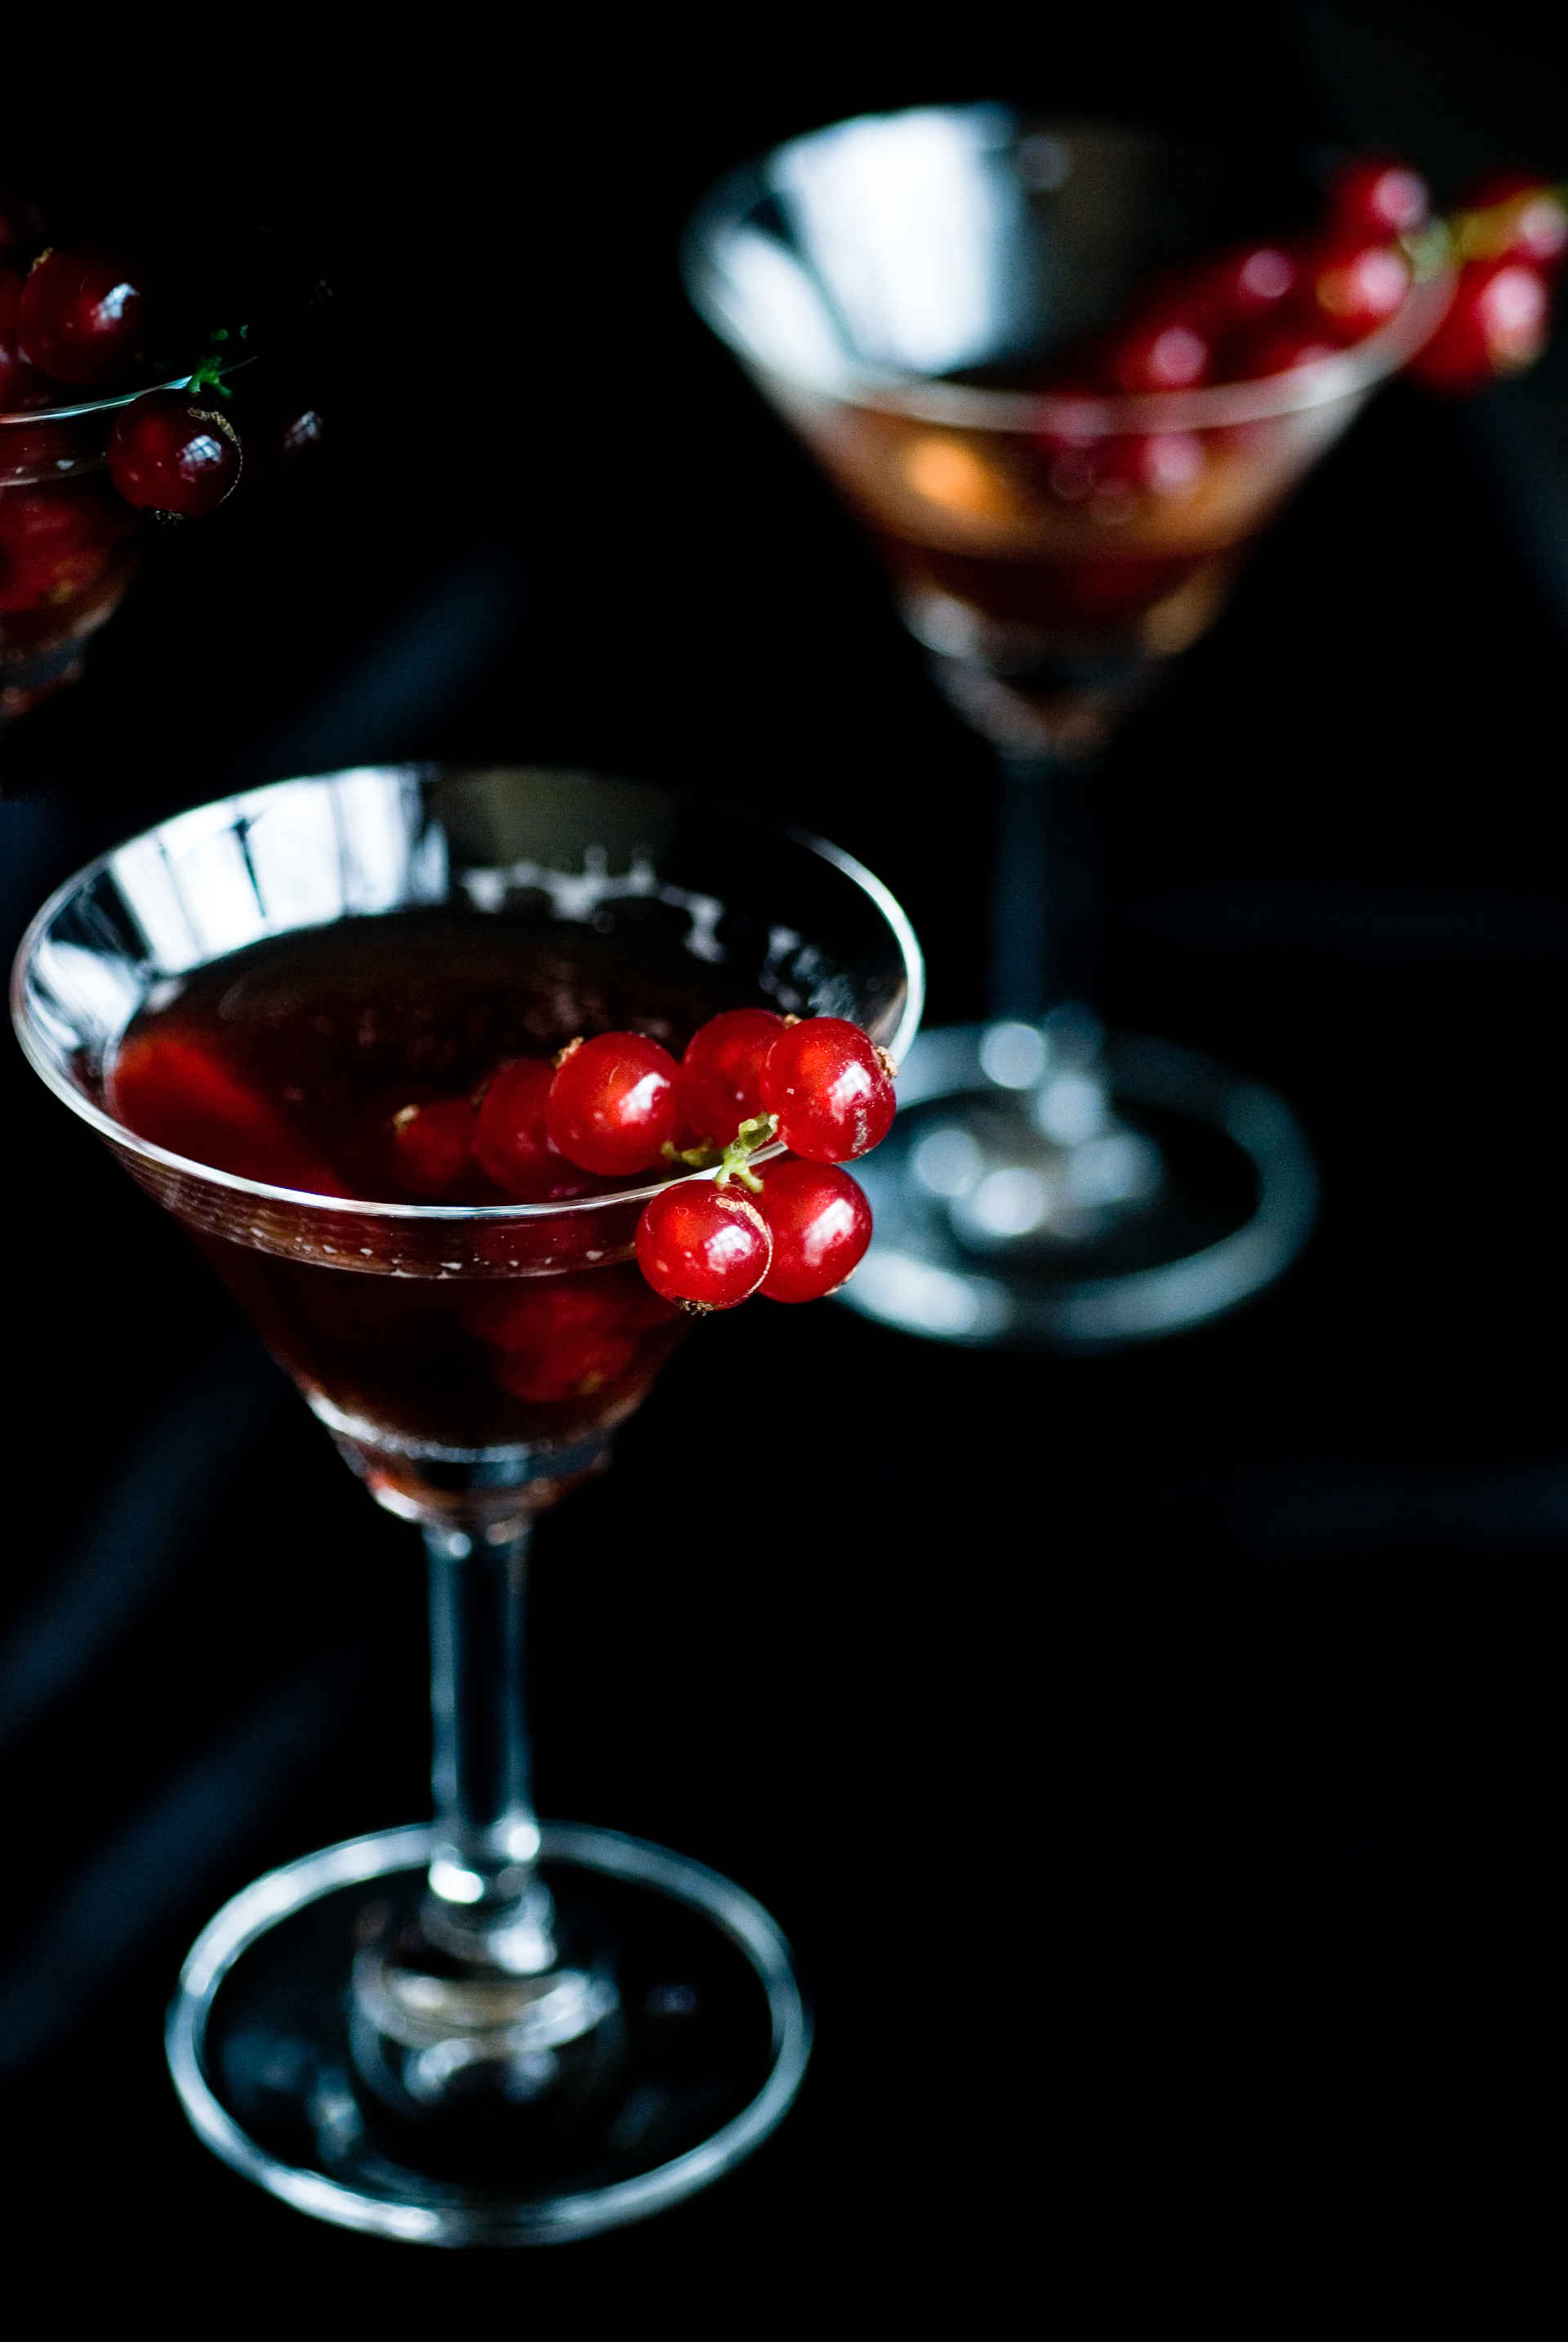 Martini glass of Emeraude on a dark background